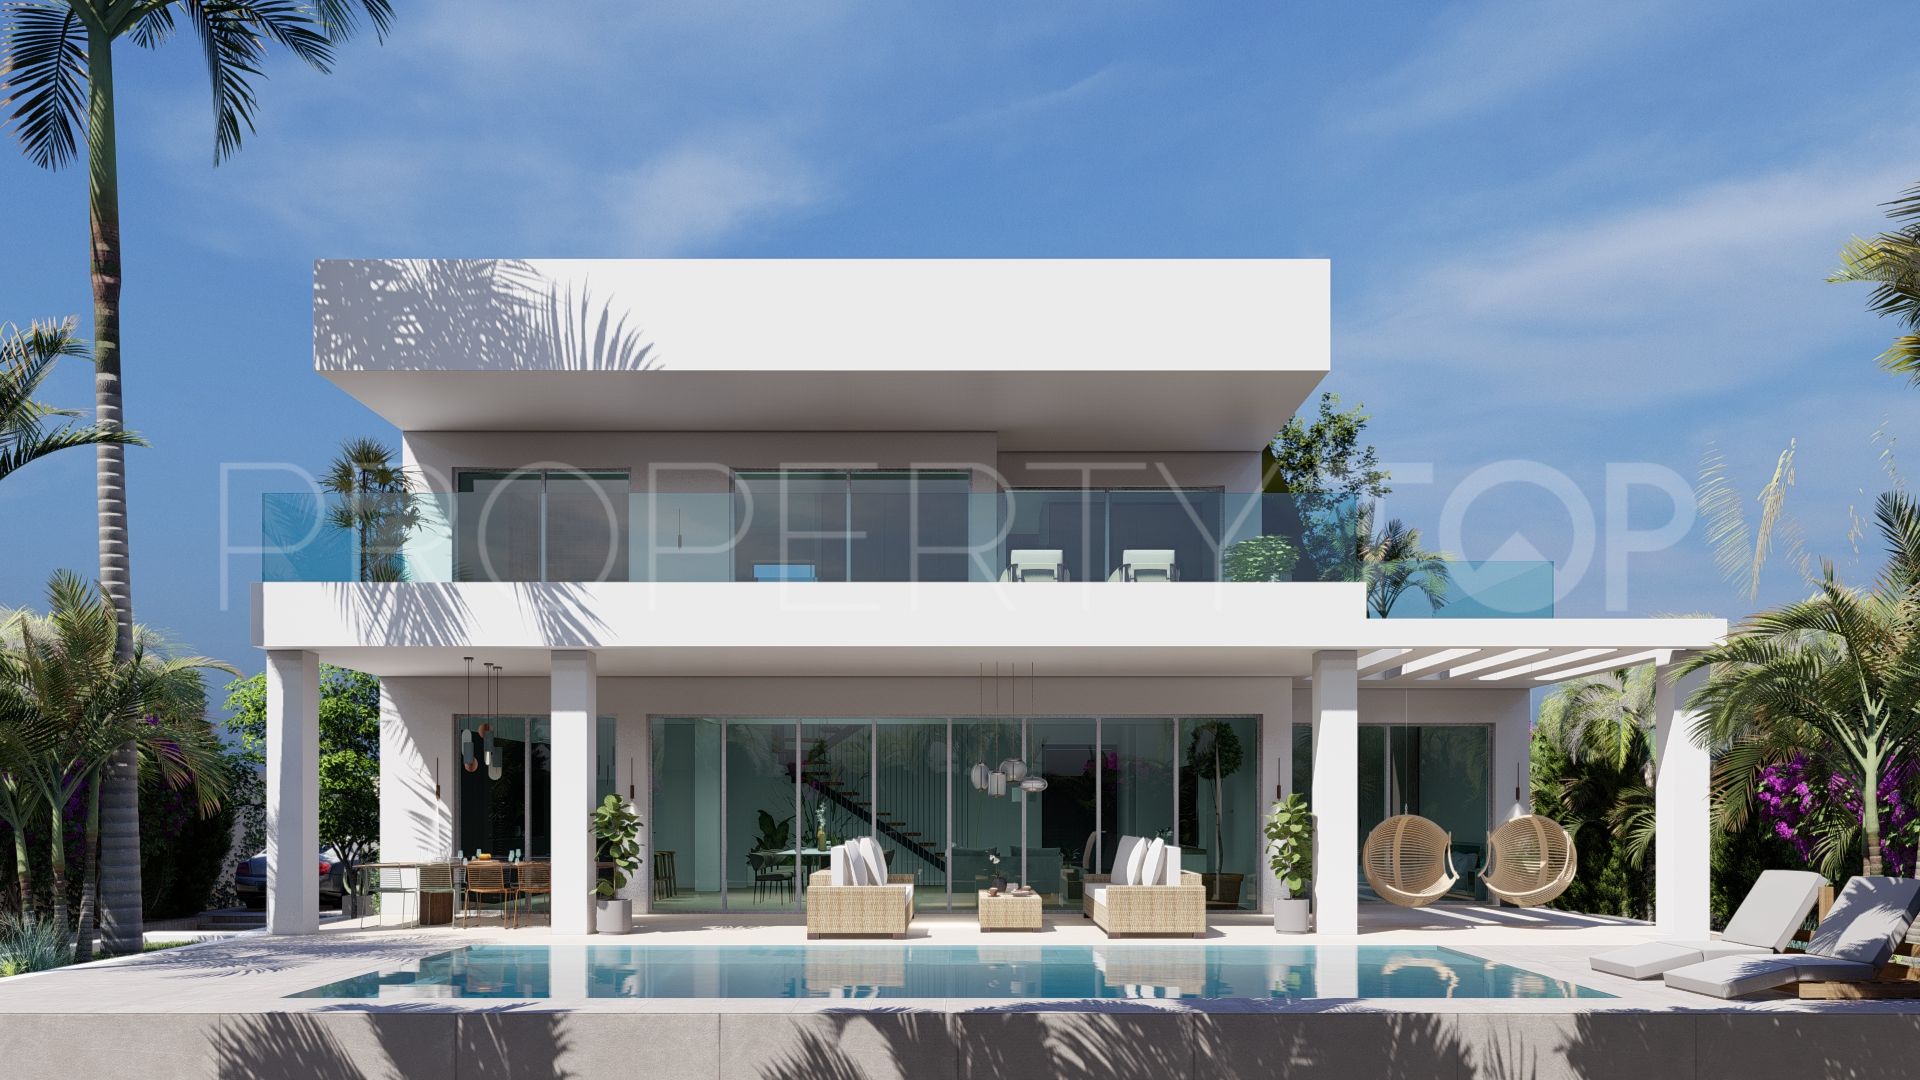 5 bedrooms villa in Linda Vista Baja for sale